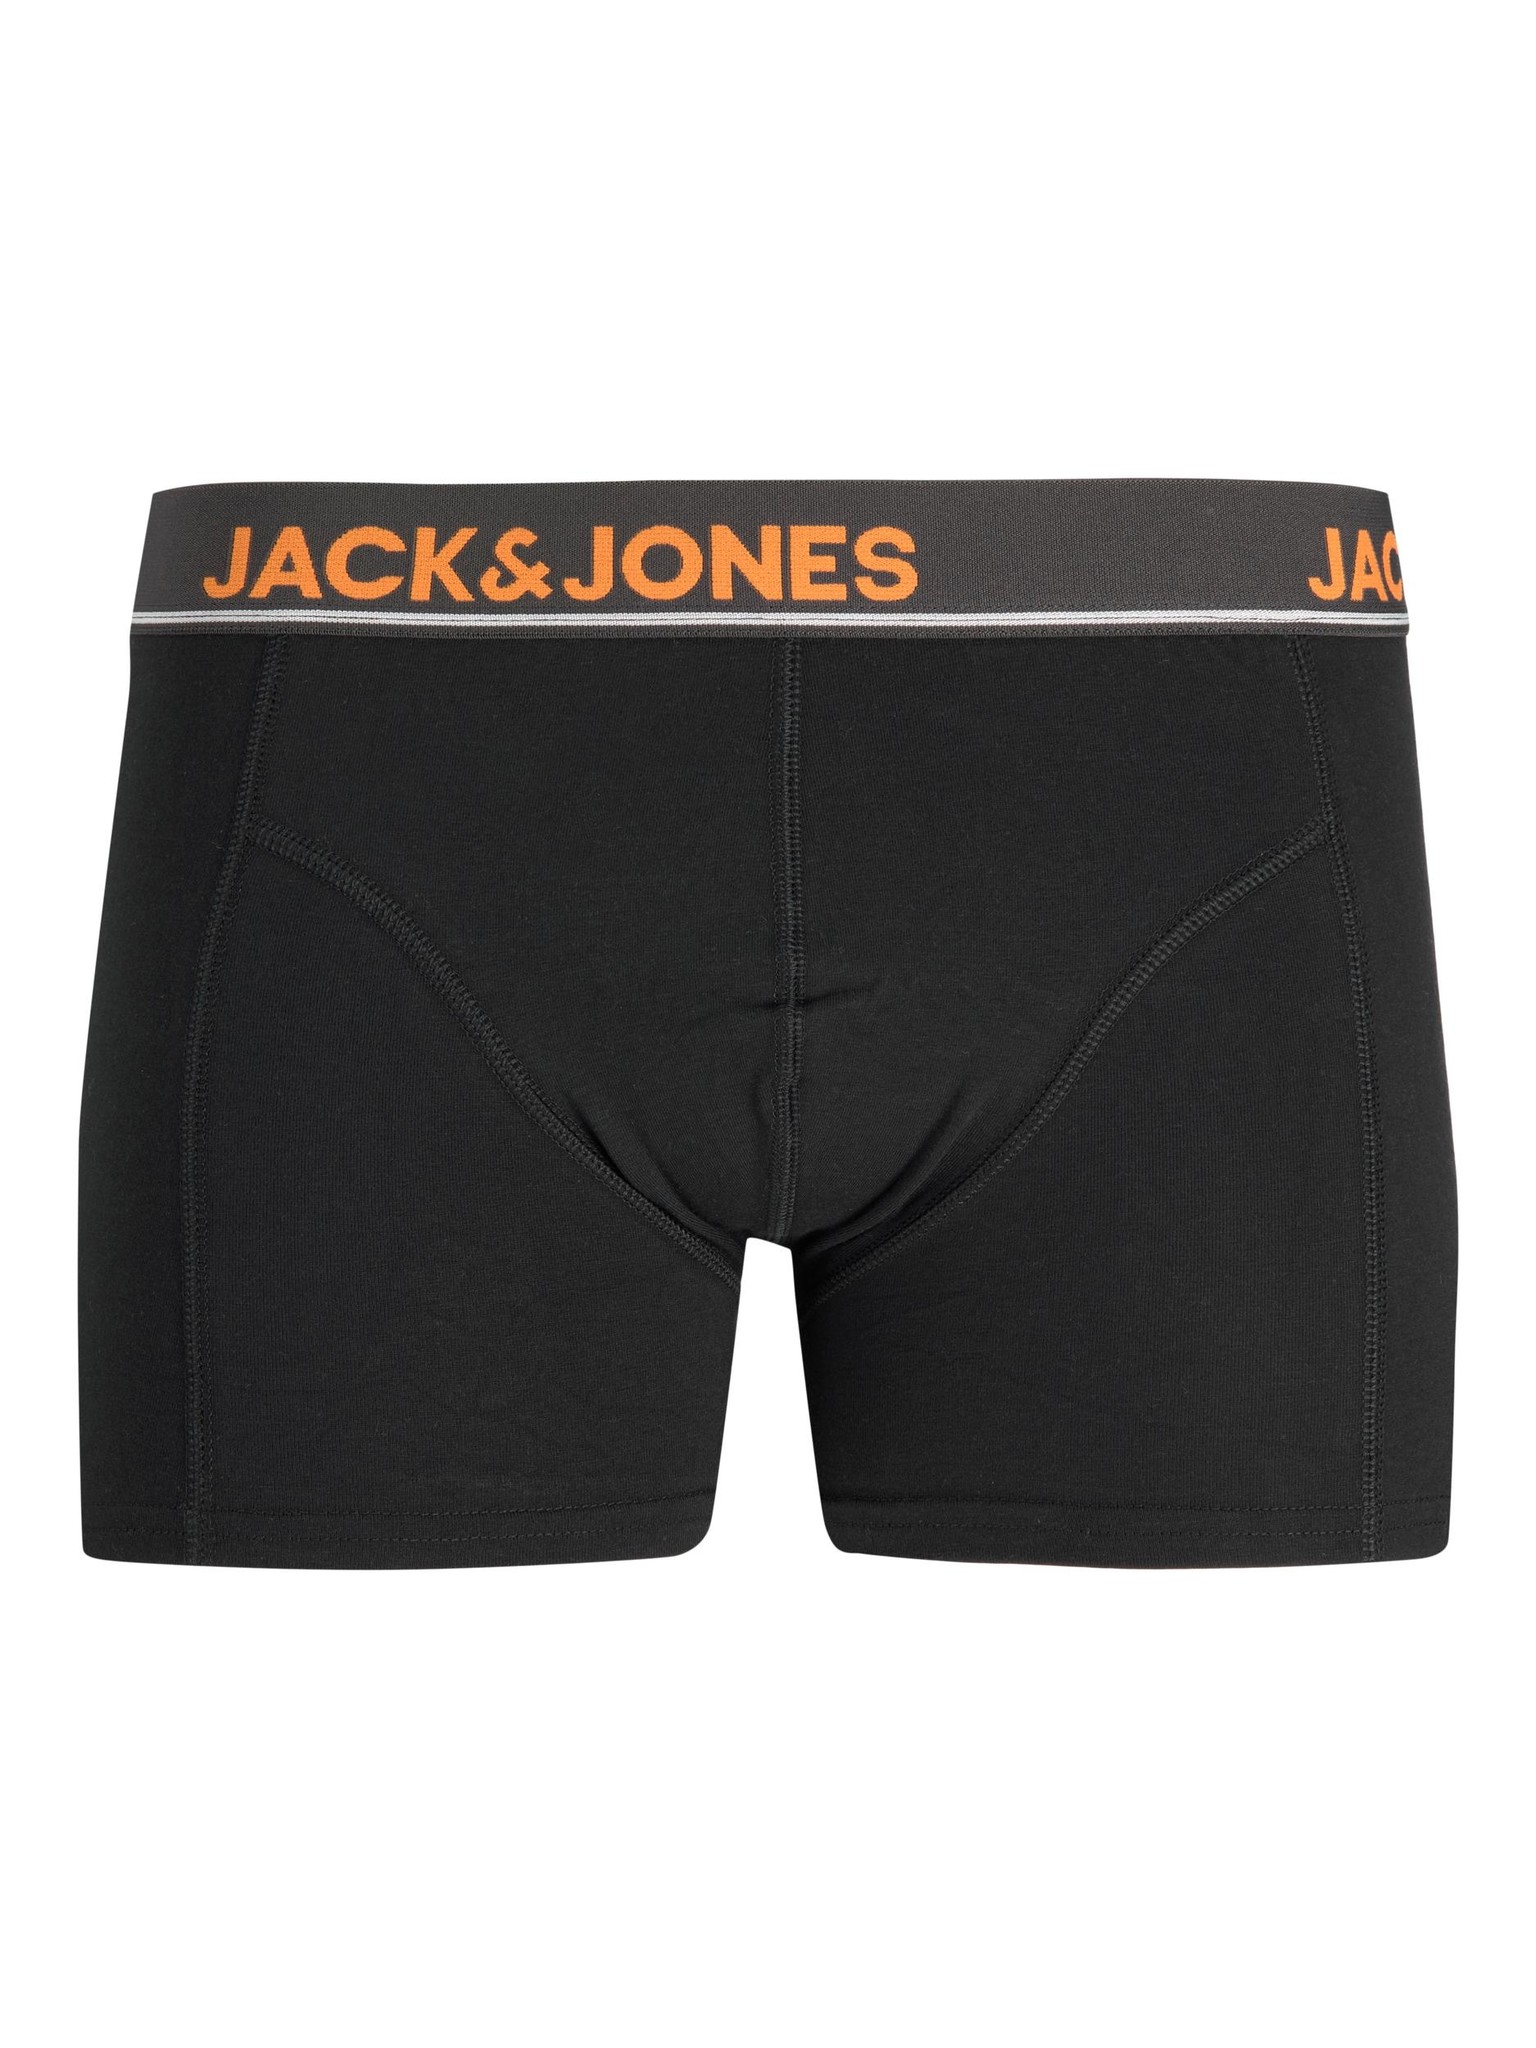 Lacoste Classic Boxer Shorts Men Black Trunks 3-Pack